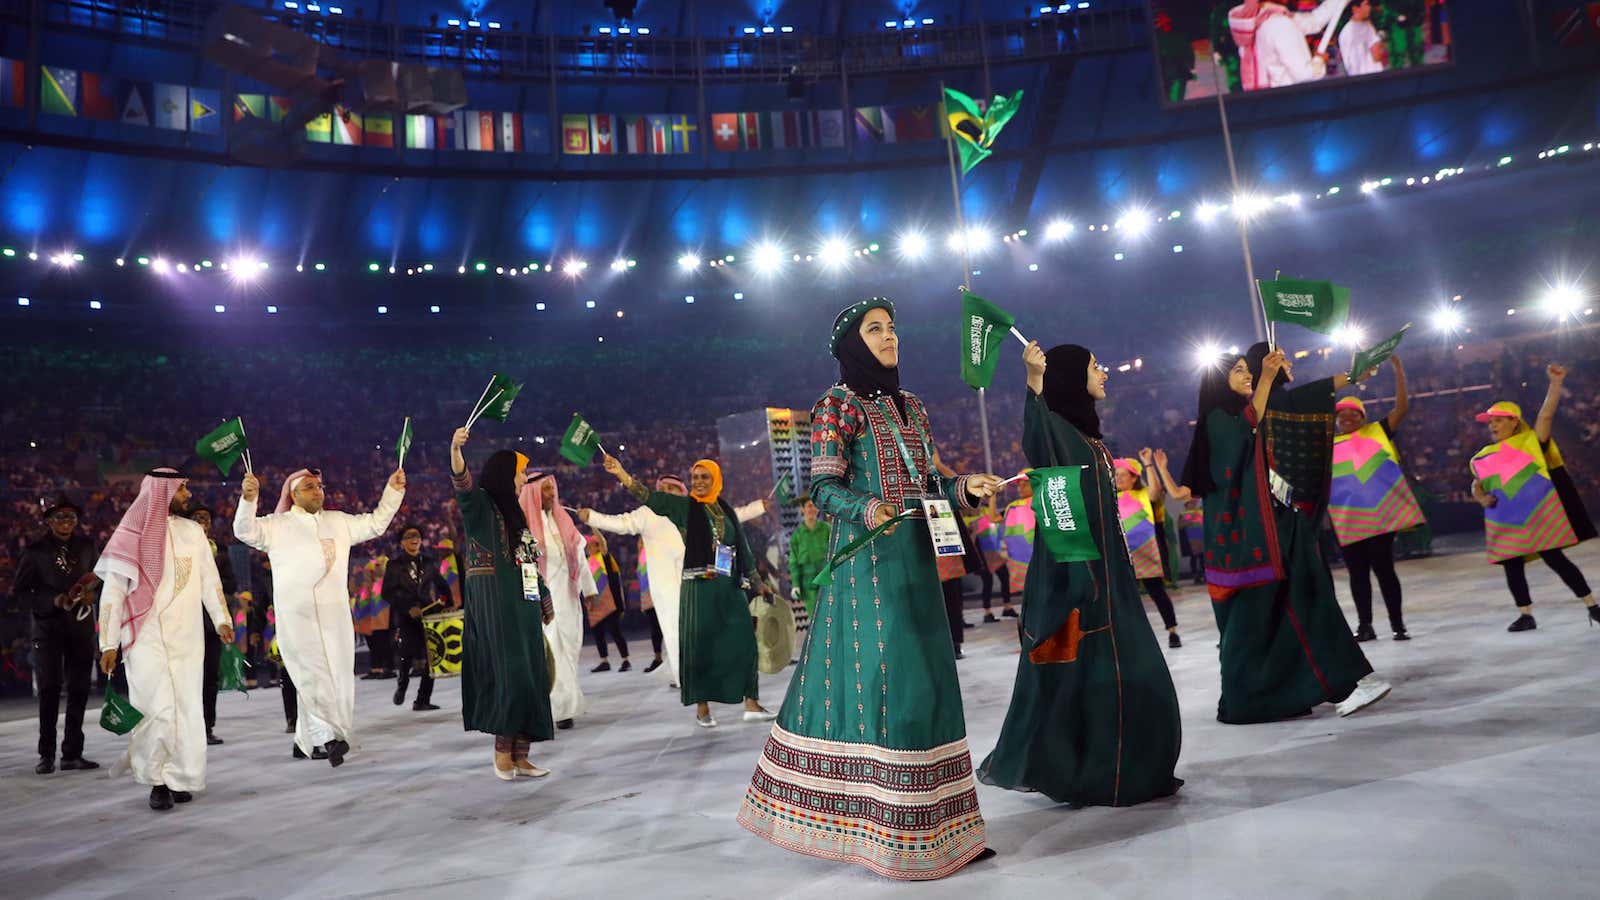 Four women and nine men are representing Saudi Arabia at the 2016 Rio Olympics.